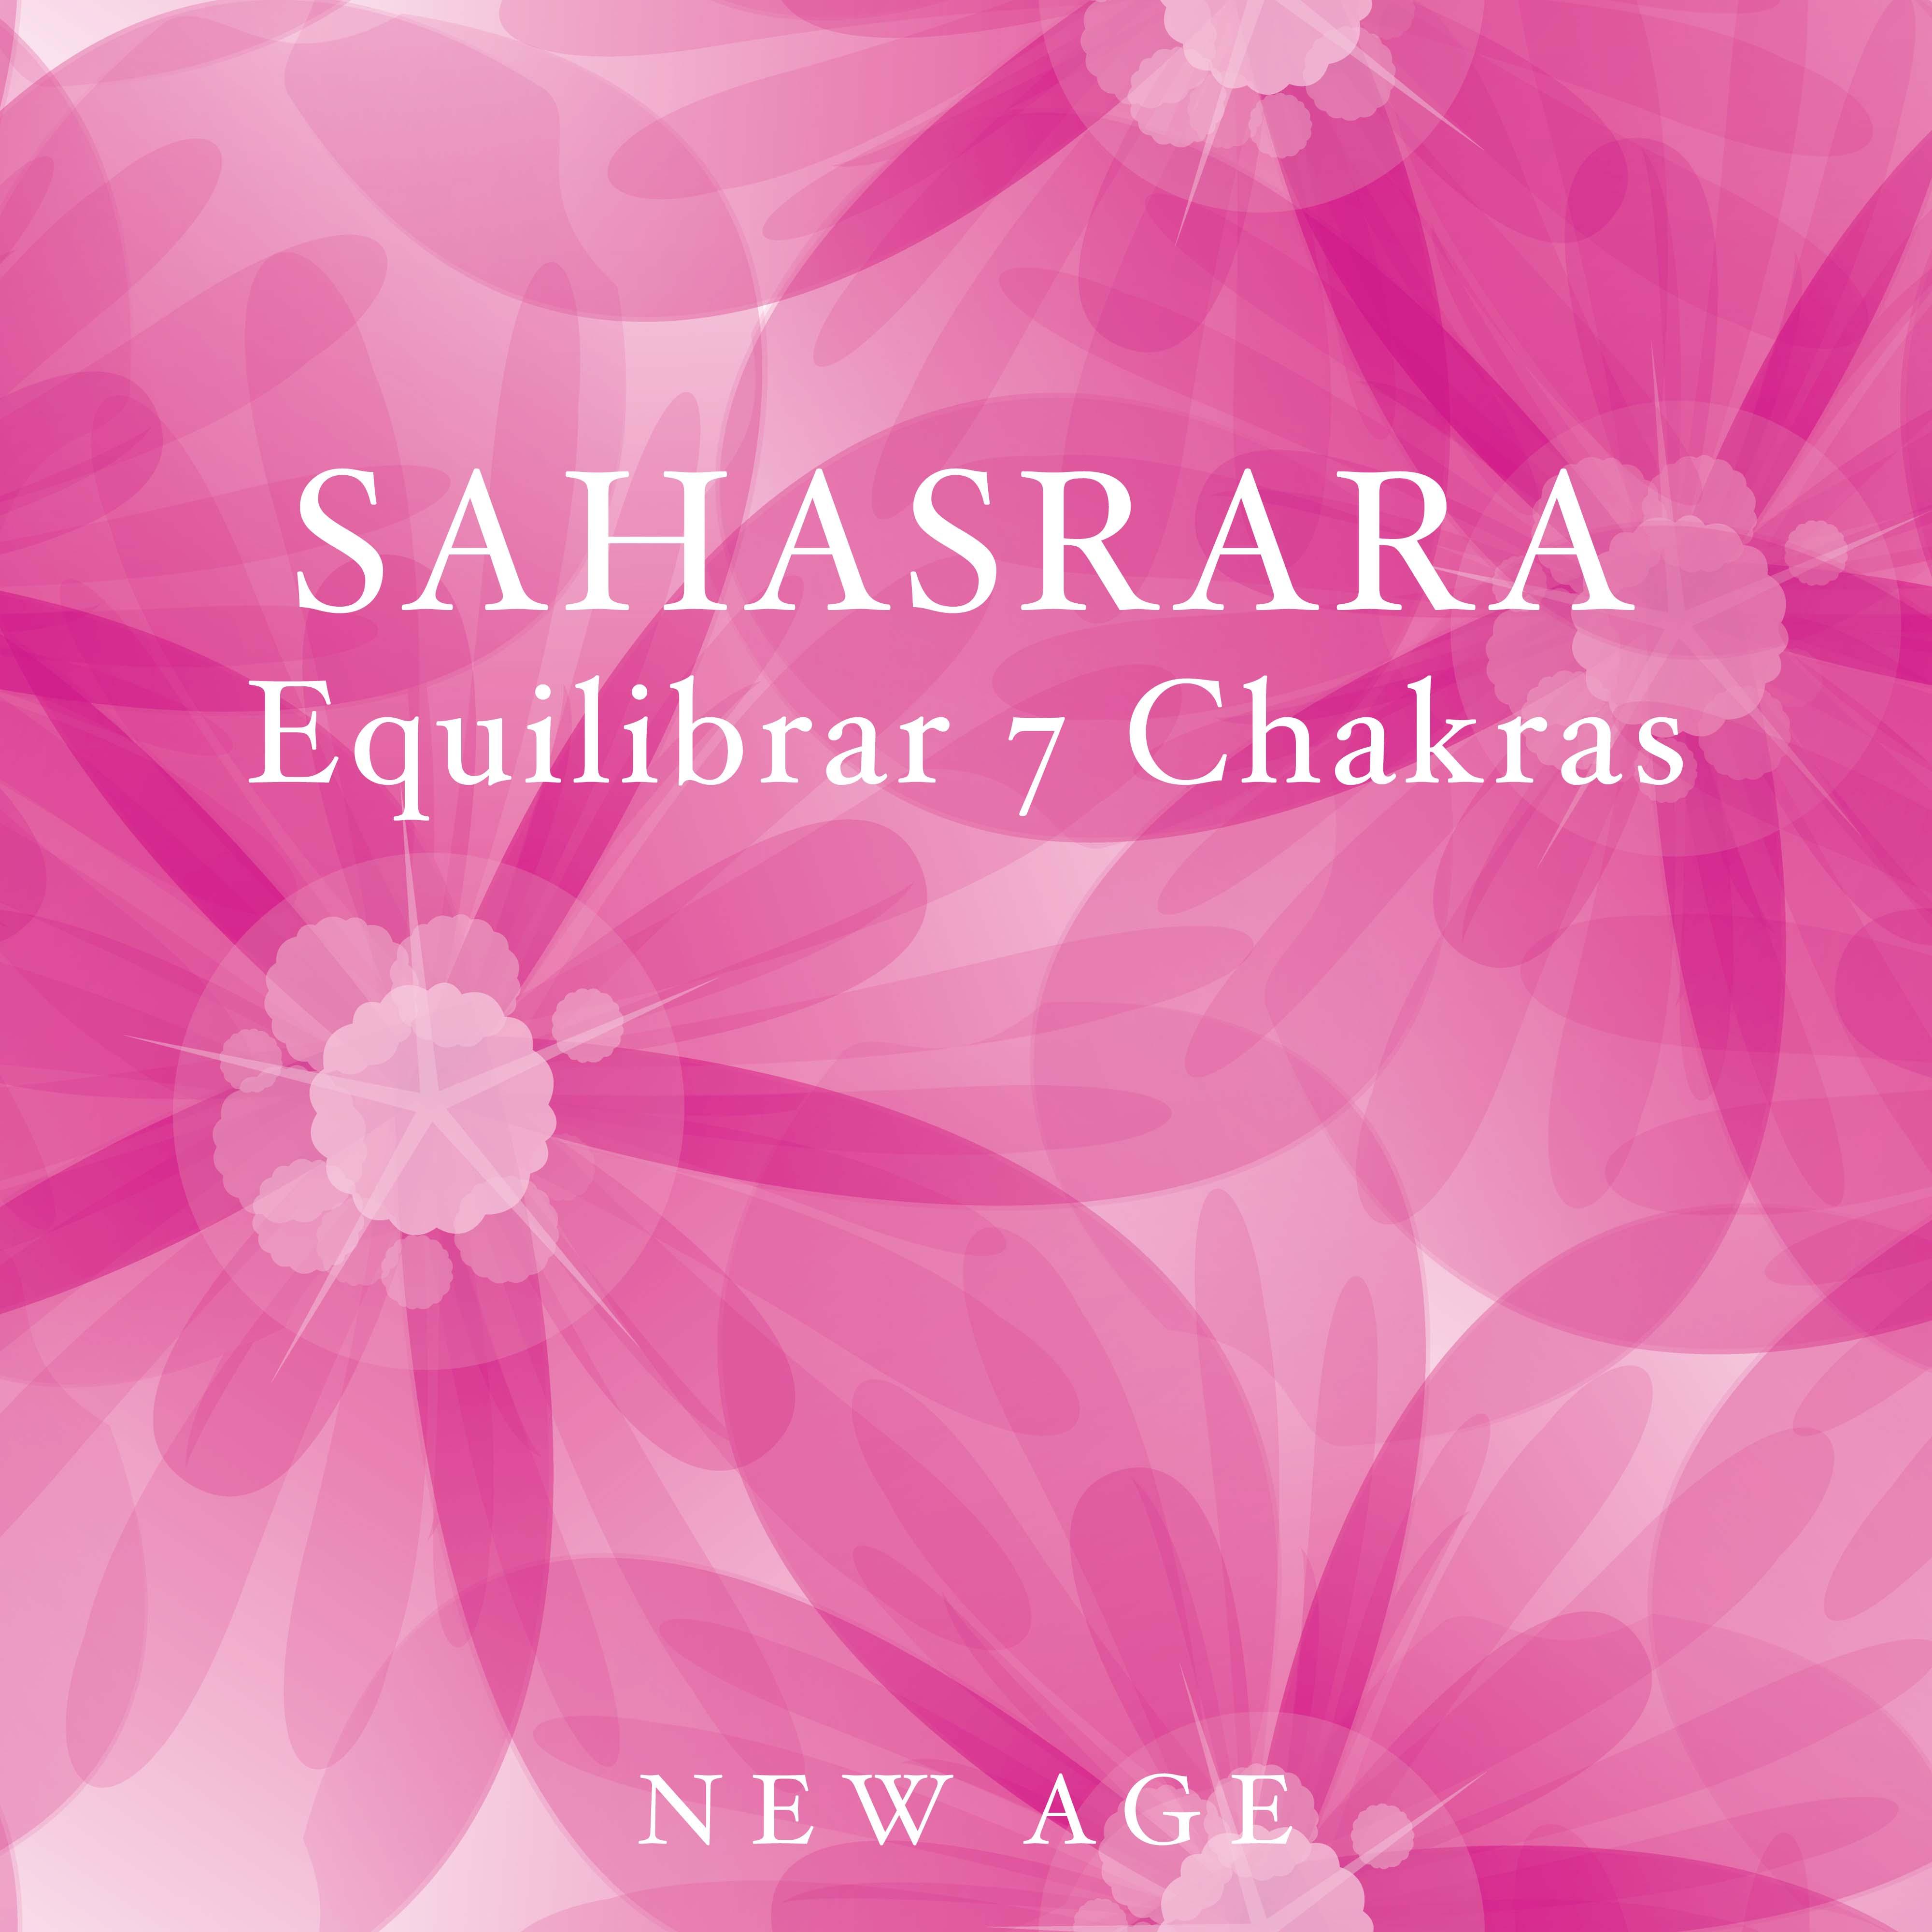 Sahasrara - 7 Chakras, Equilibrar Chakras